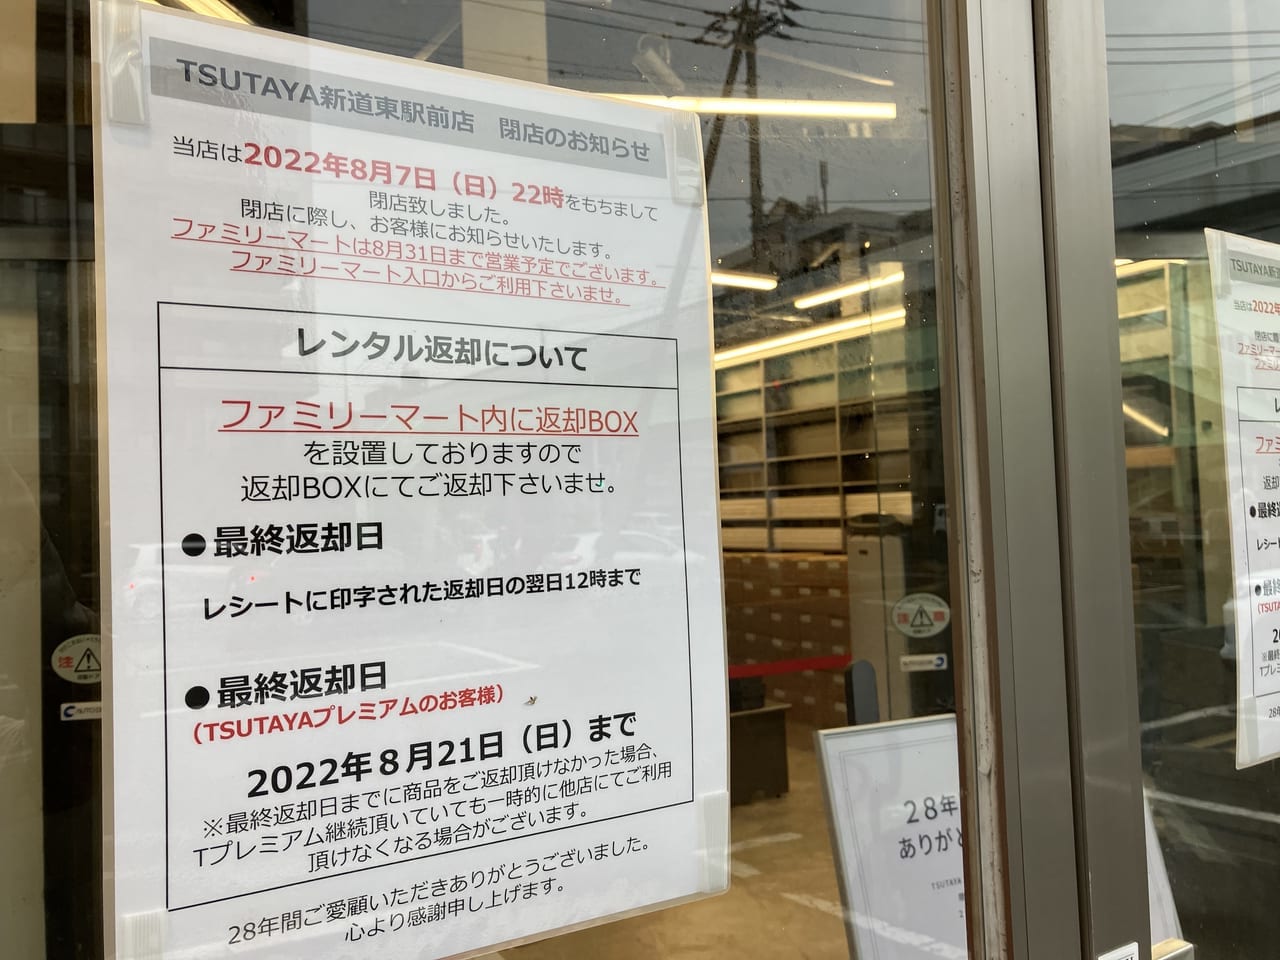 「TSUTAYA新道東店」に続き、「ファミリーマート新道東駅前店」も8月31日に閉店。